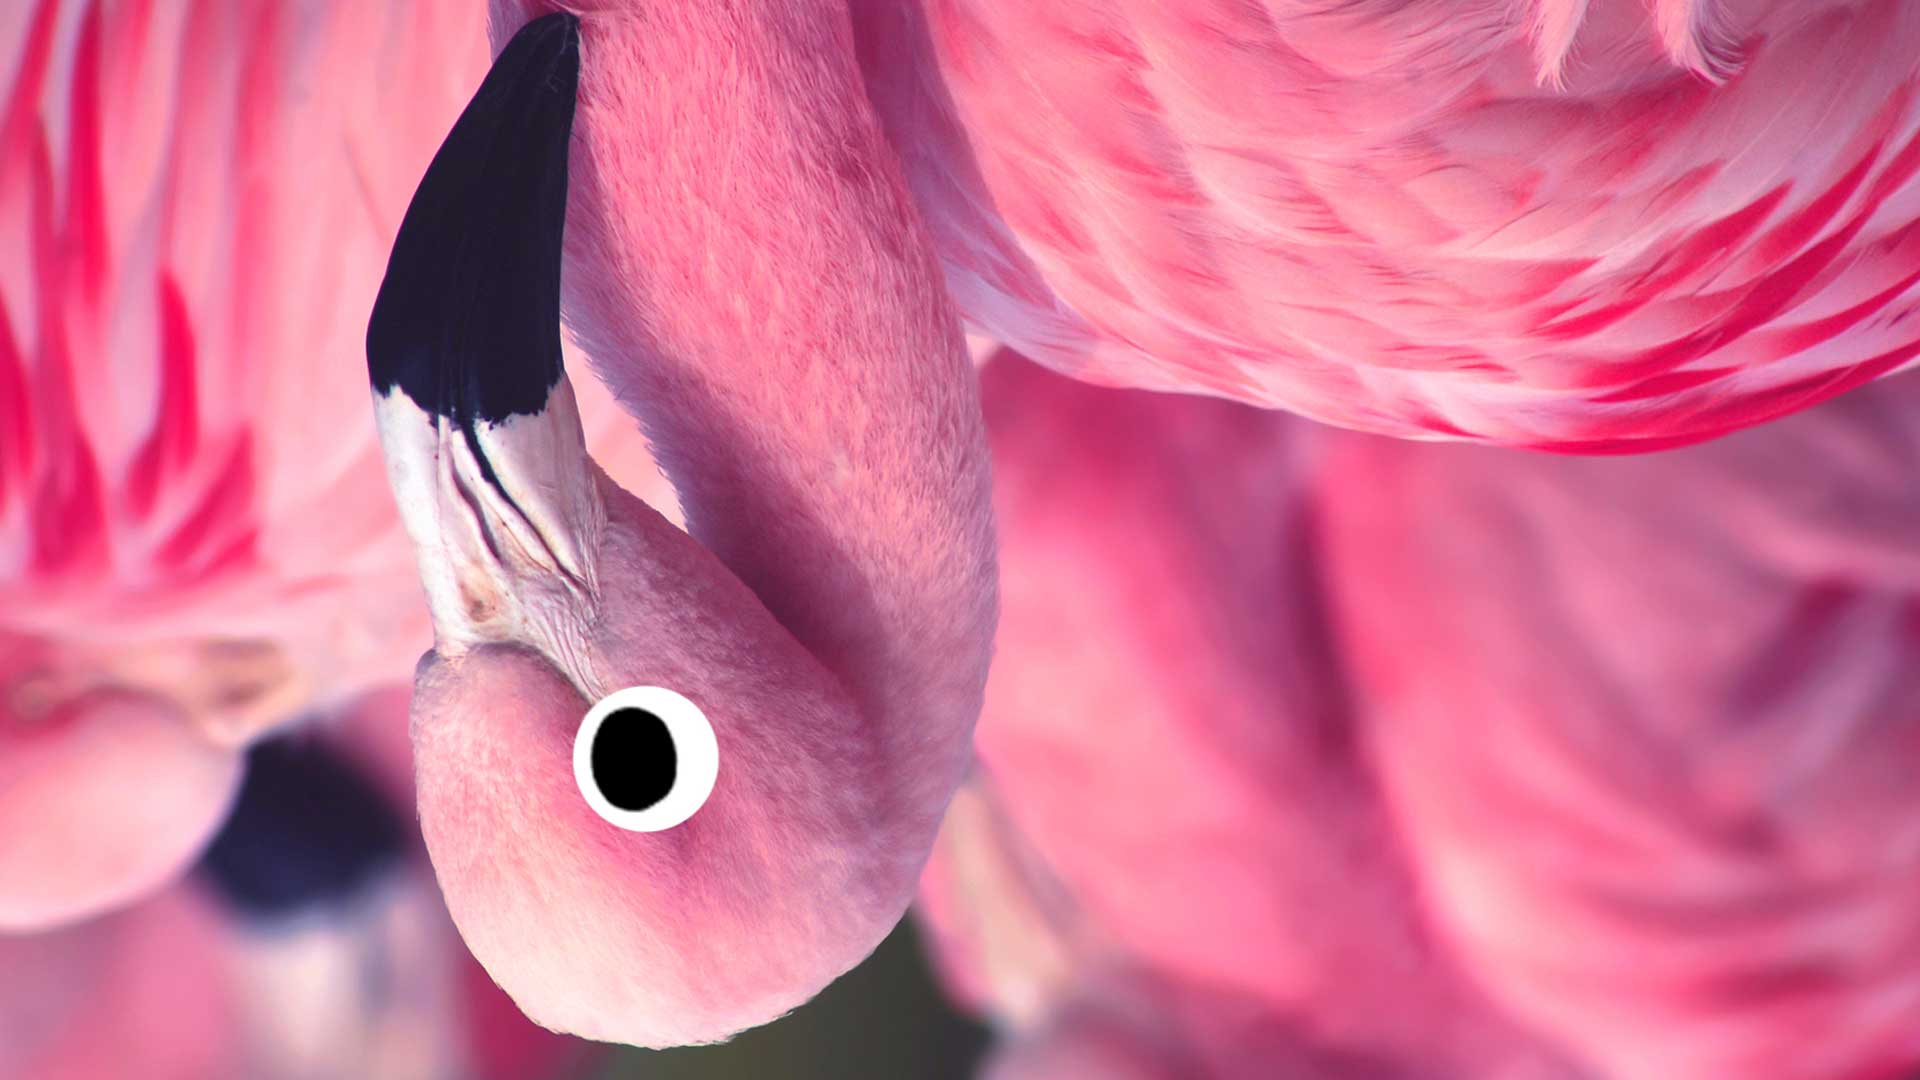 An upside down flamingo